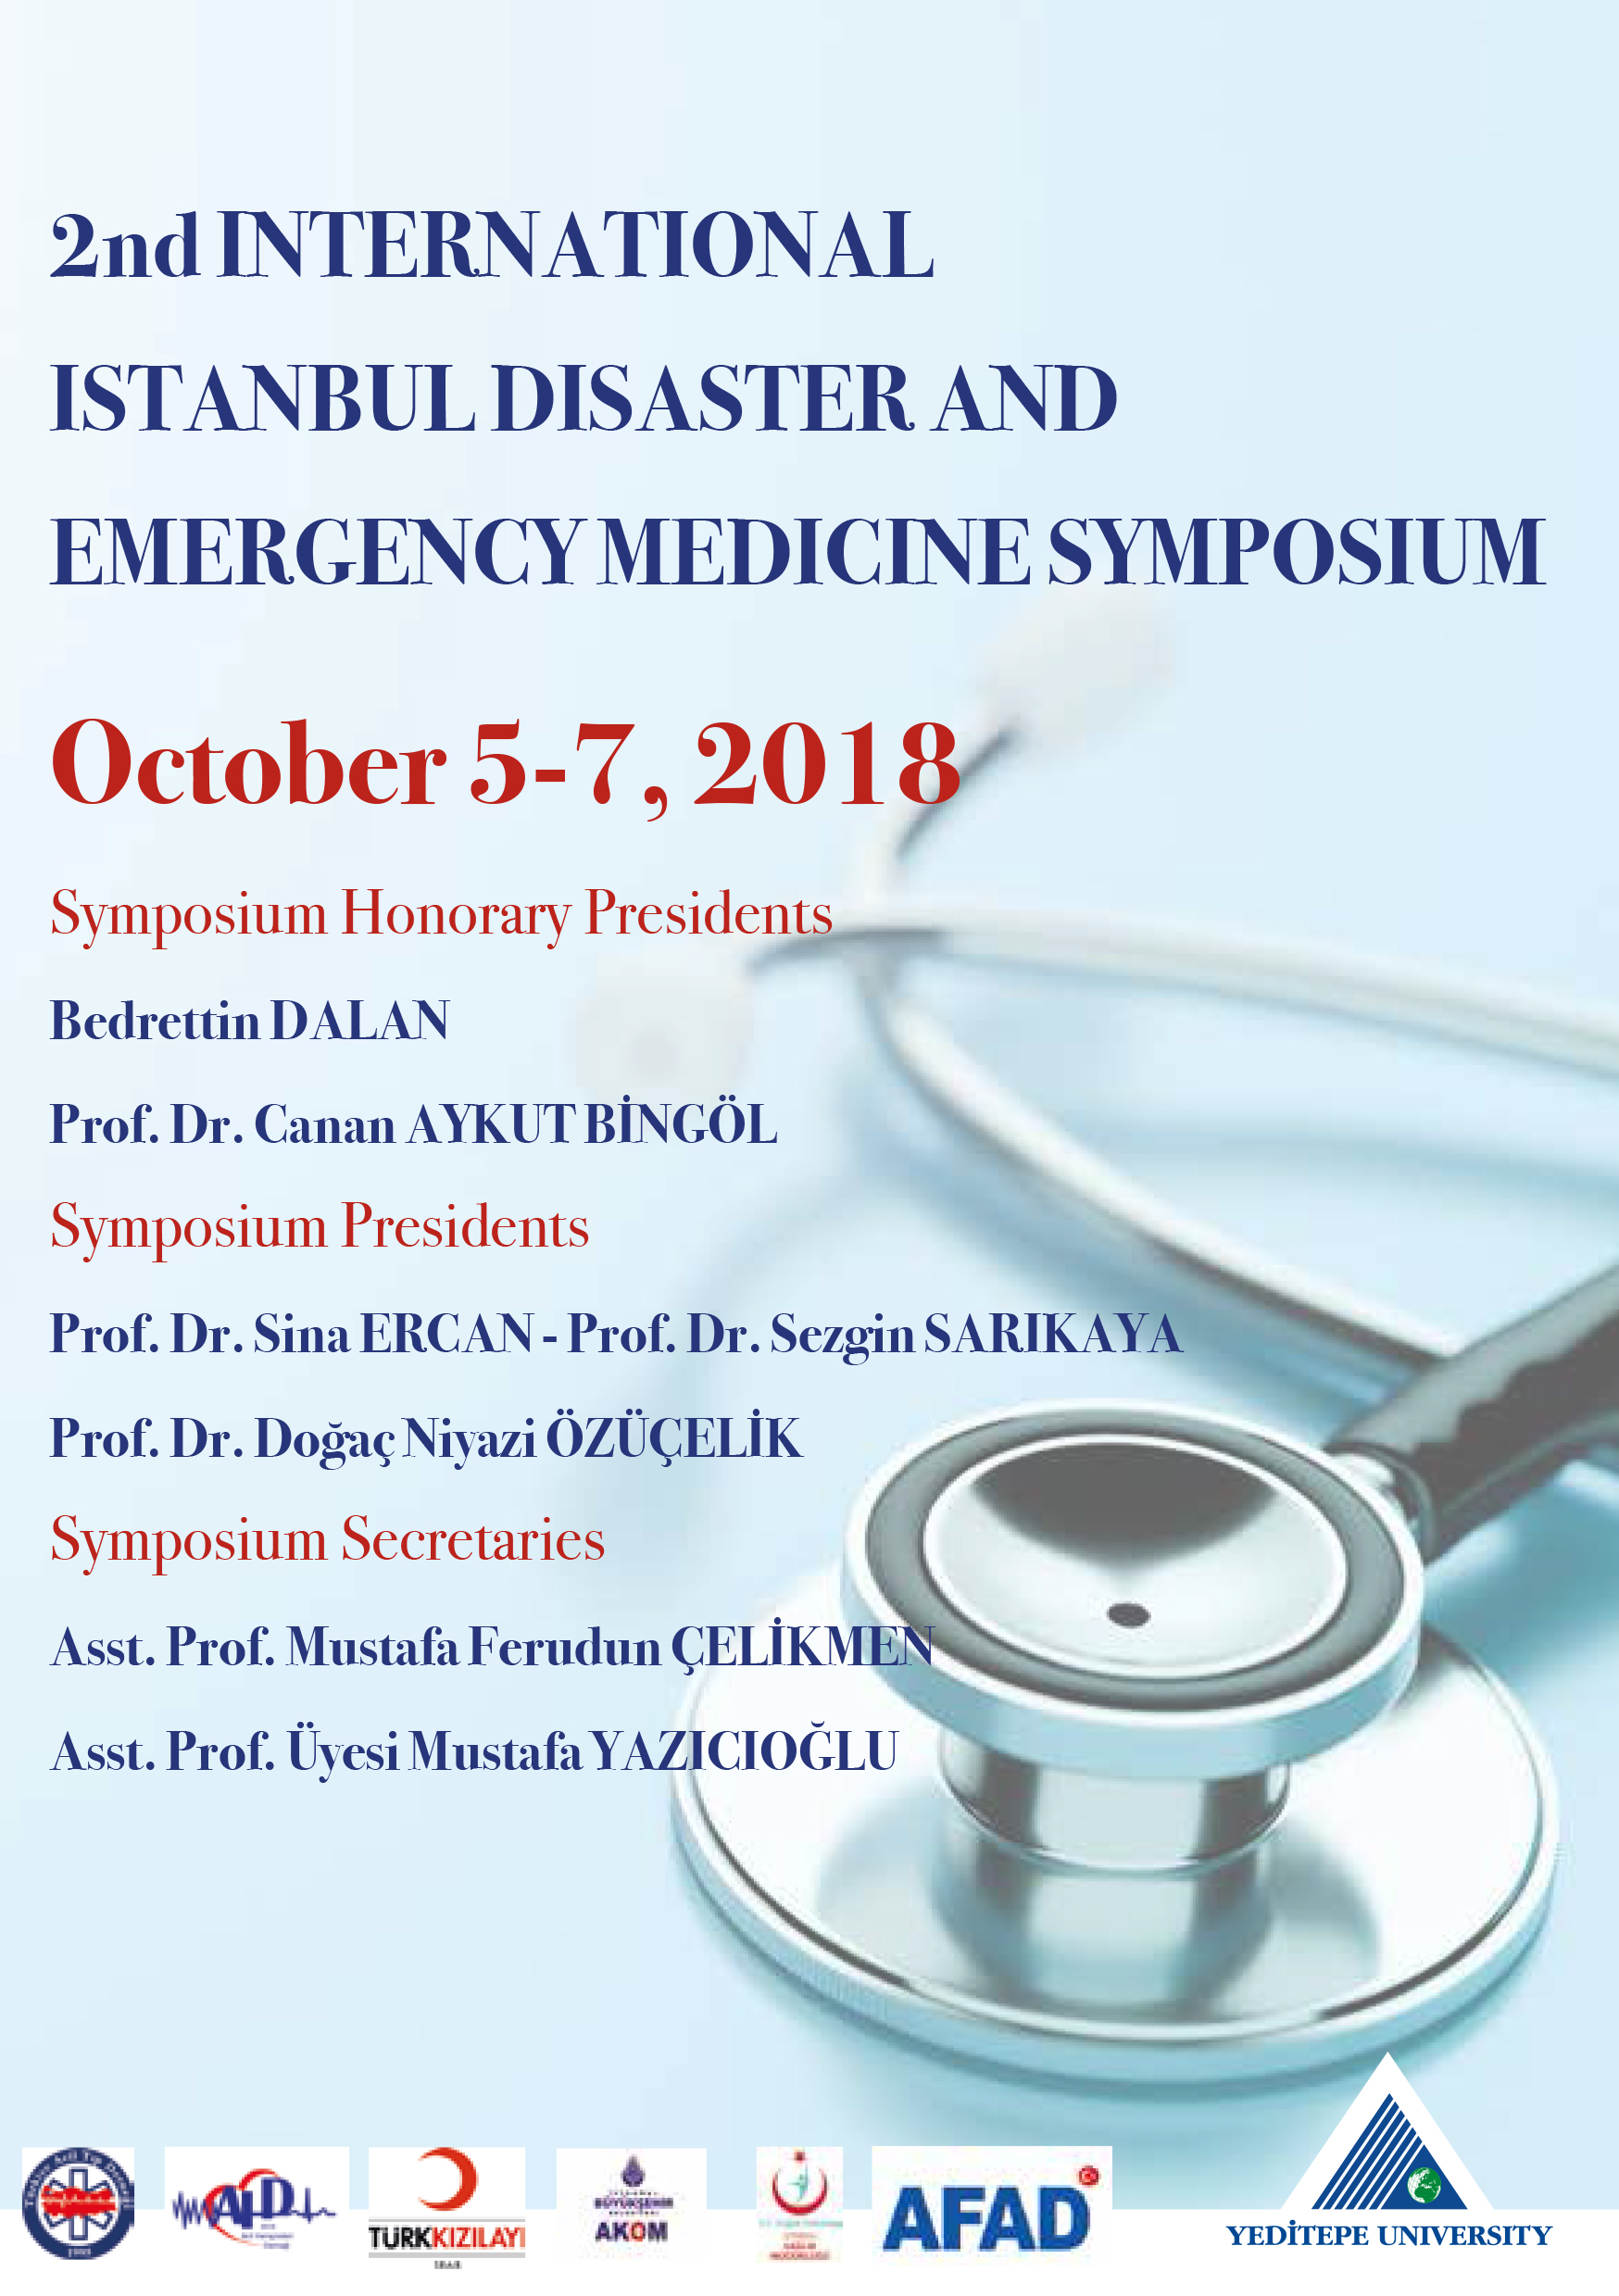 2nd INTERNATIONAL ISTANBUL DISASTER AND EMERGENCY MEDICINE SYMPOSIUM